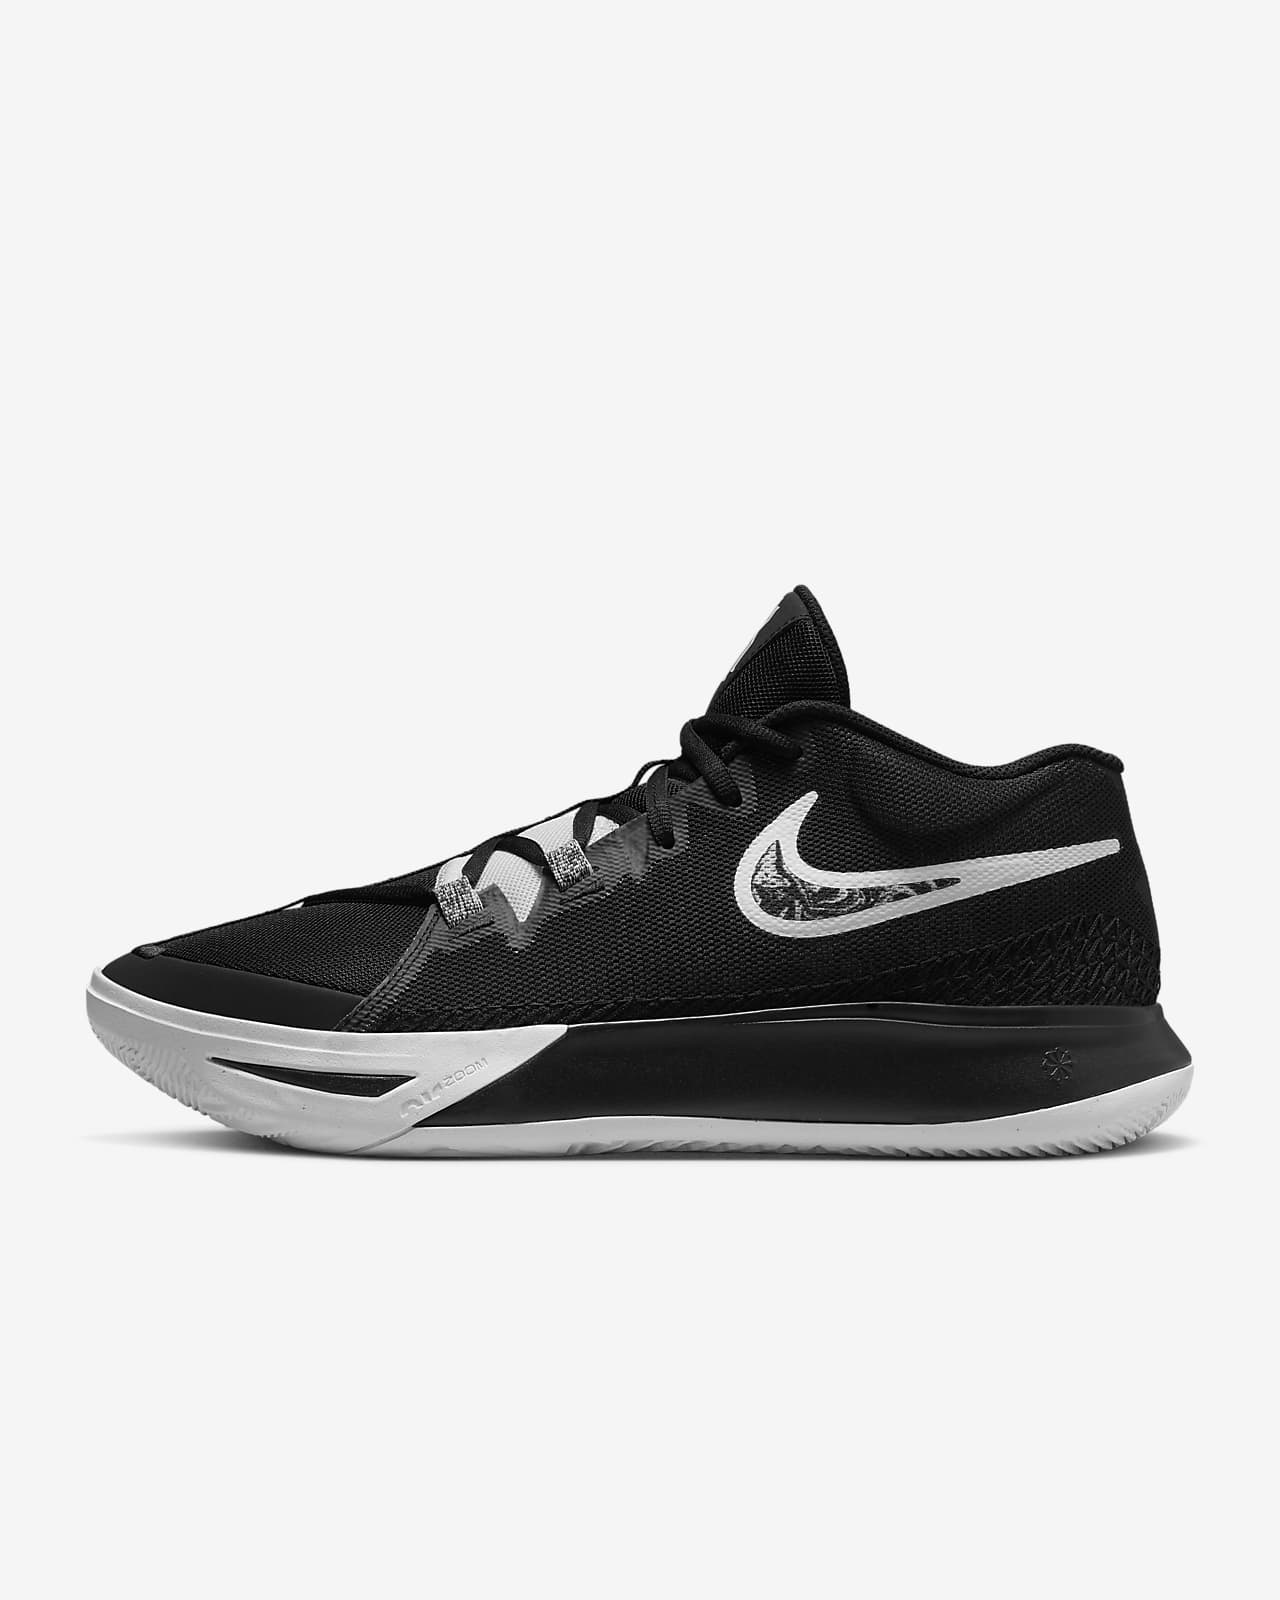 Recomendación sombra Saca la aseguranza Calzado de básquetbol para hombre Kyrie Flytrap 6. Nike.com